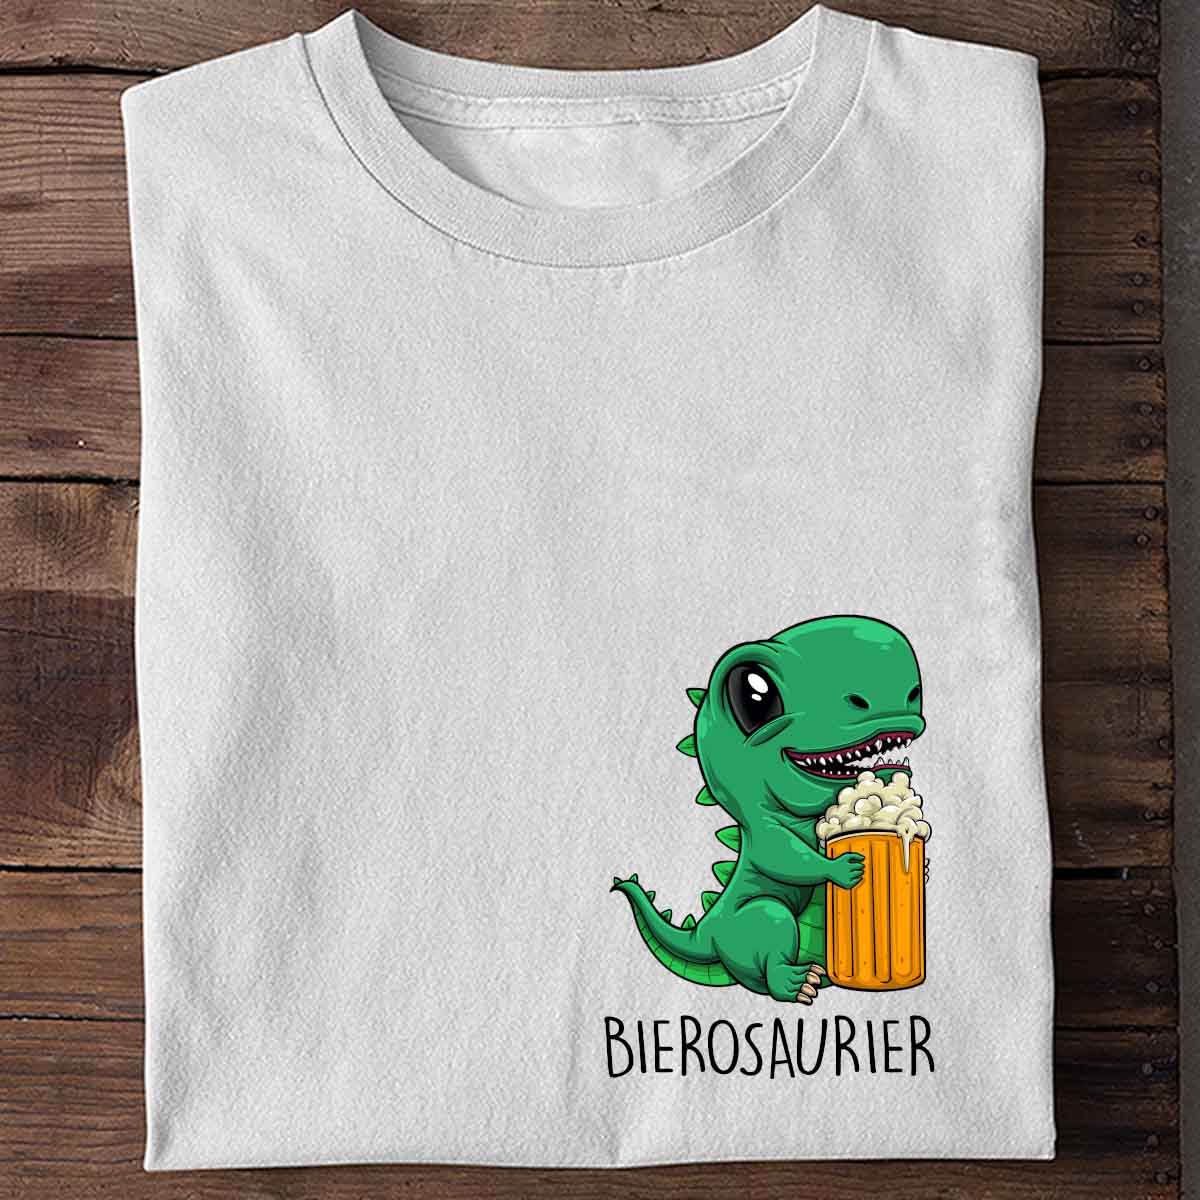 Bierosaurier - Shirt Unisex Brust